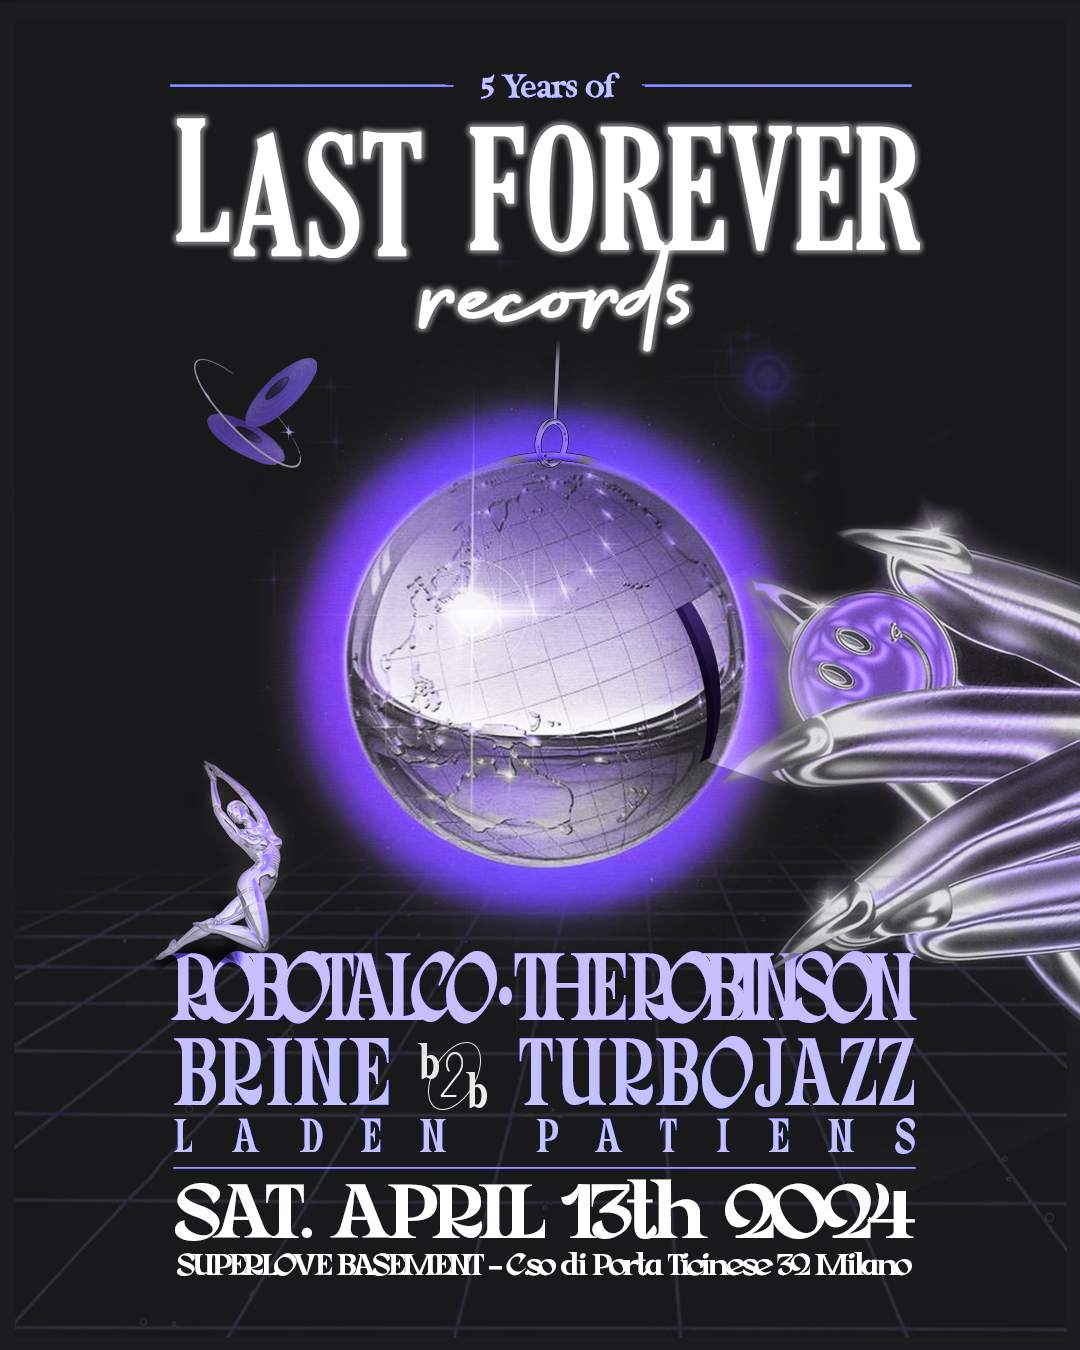 Last Forever *5th Anniversary* with Robotalco, The Robinson, Brine b2b Turbojazz, Laden Patiens - フライヤー表